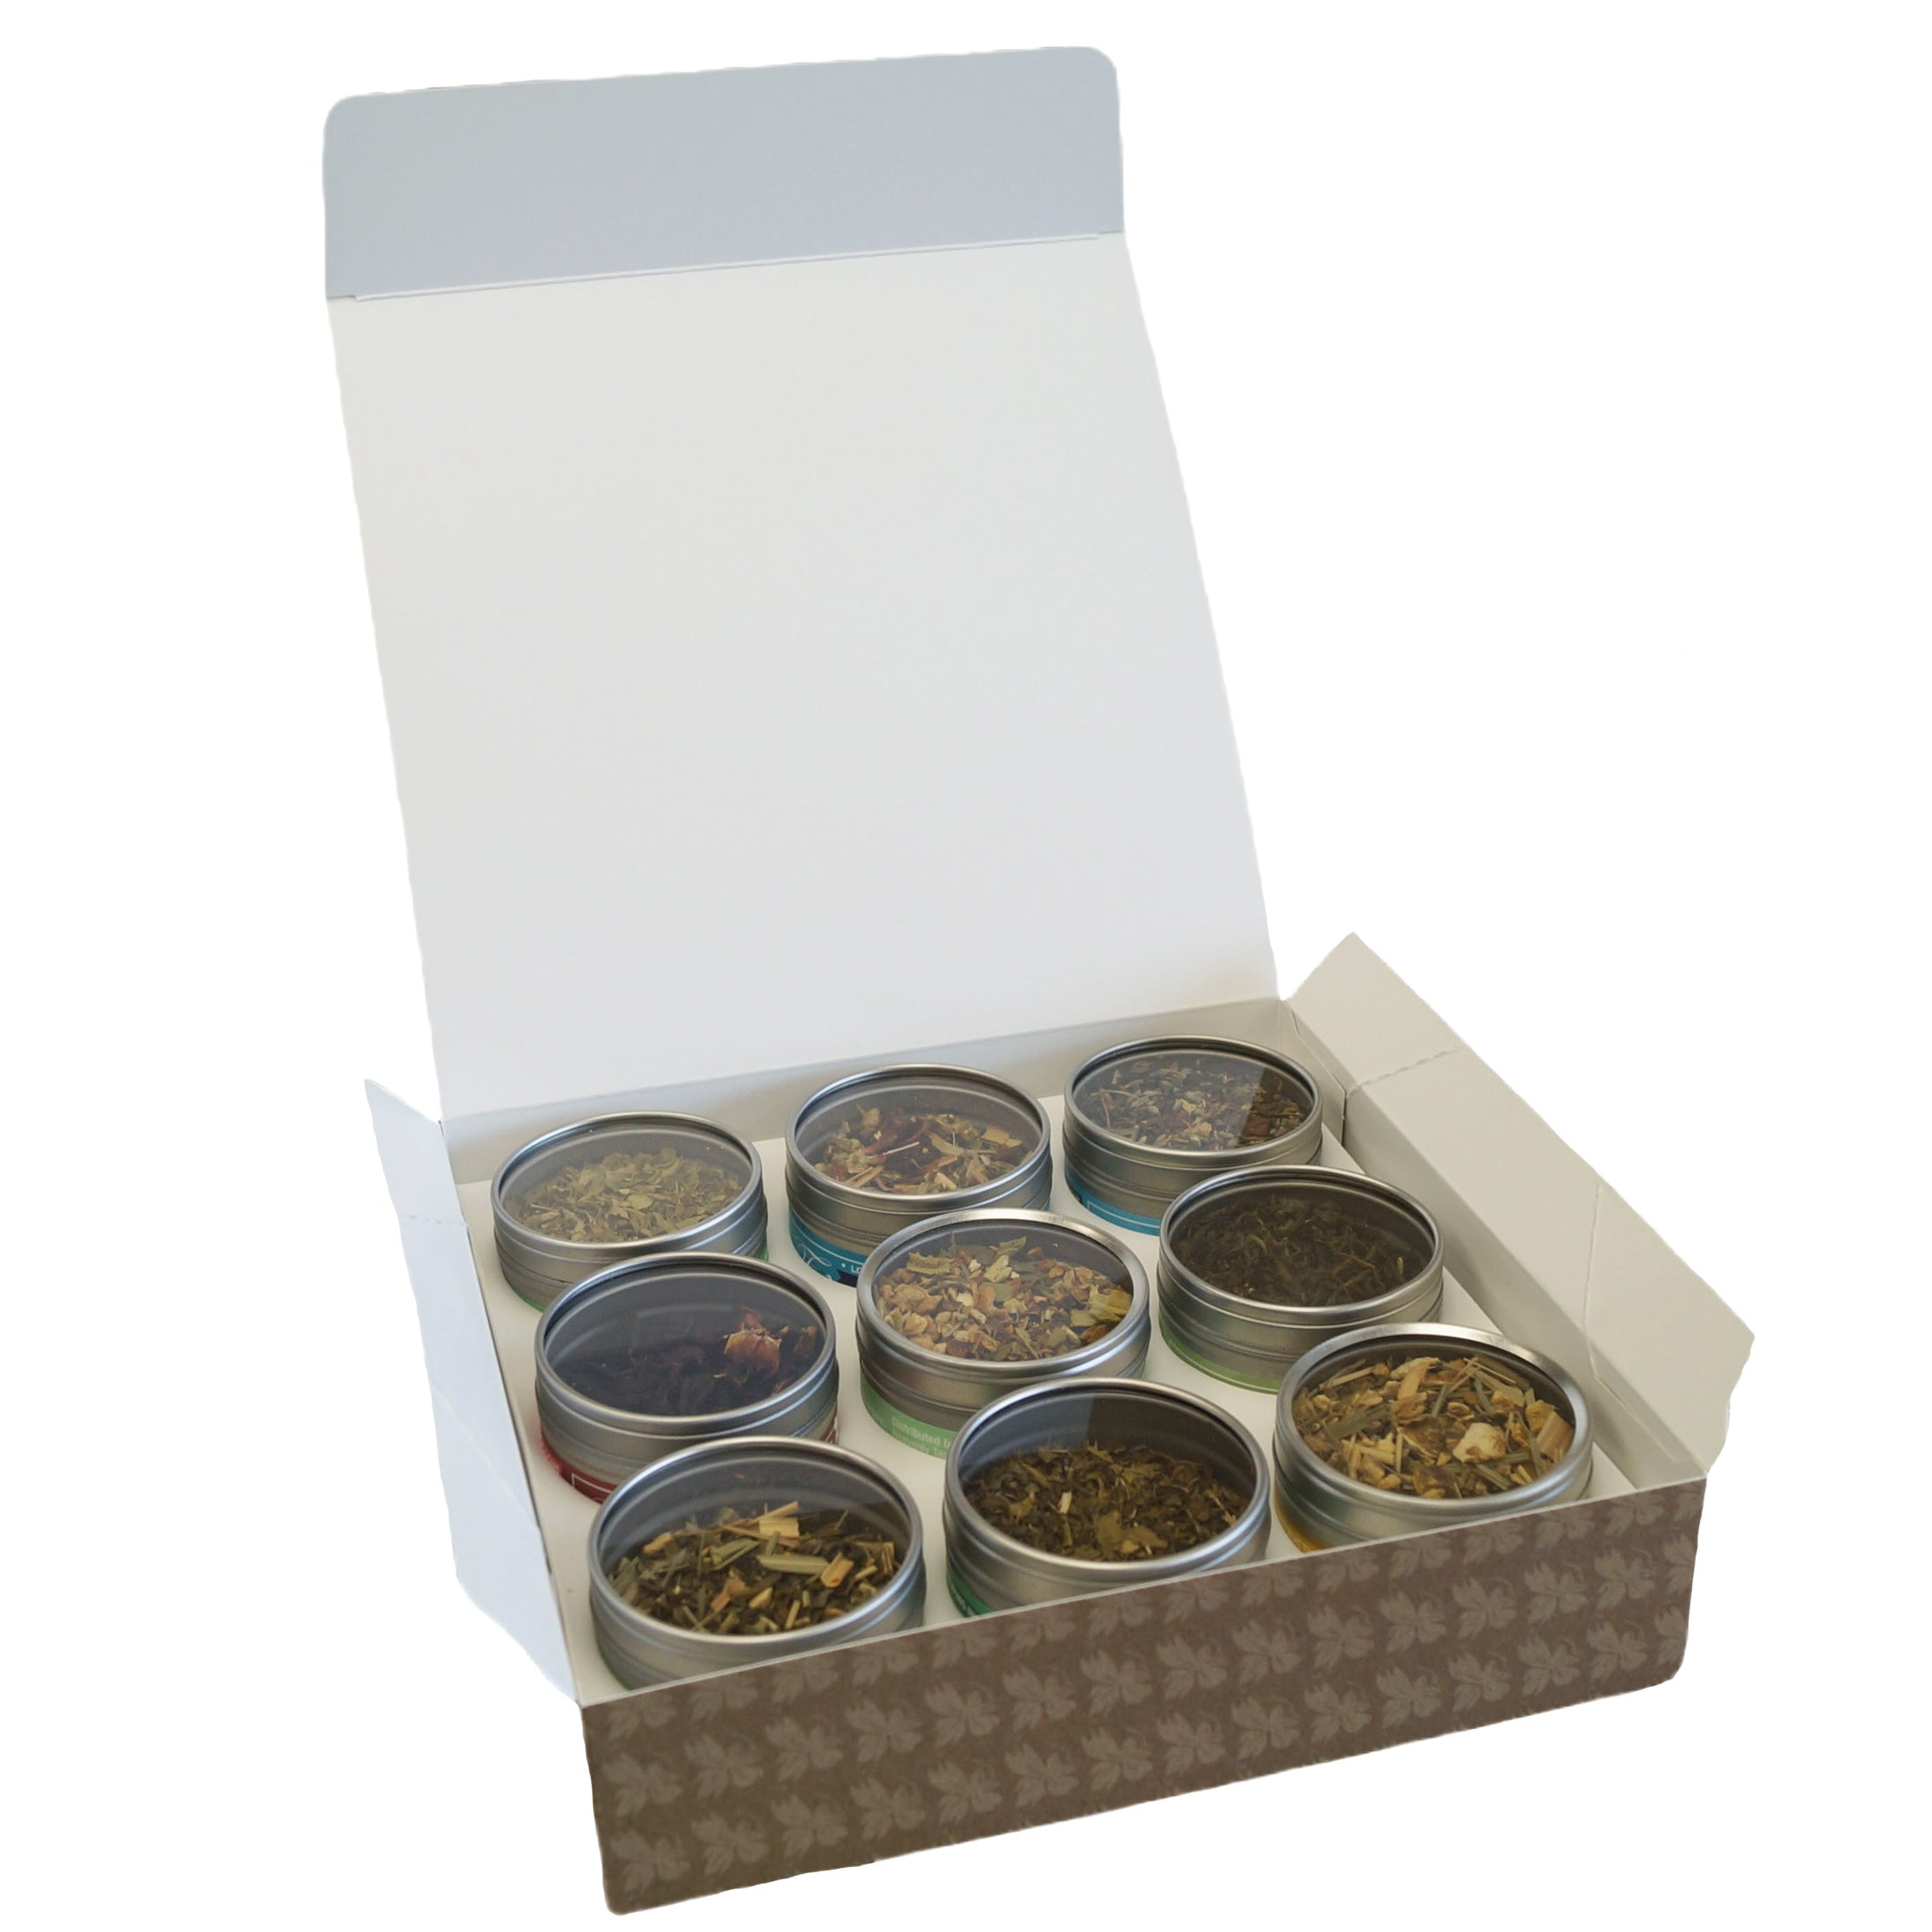 Organic Wellness 9 Tea Sampler, 9 Assorted Wellness Loose Leaf Teas & Herbal Tisanes, - Beautiful Gift for Mom, Grandma, or Her | Heavenly Tea Leaves